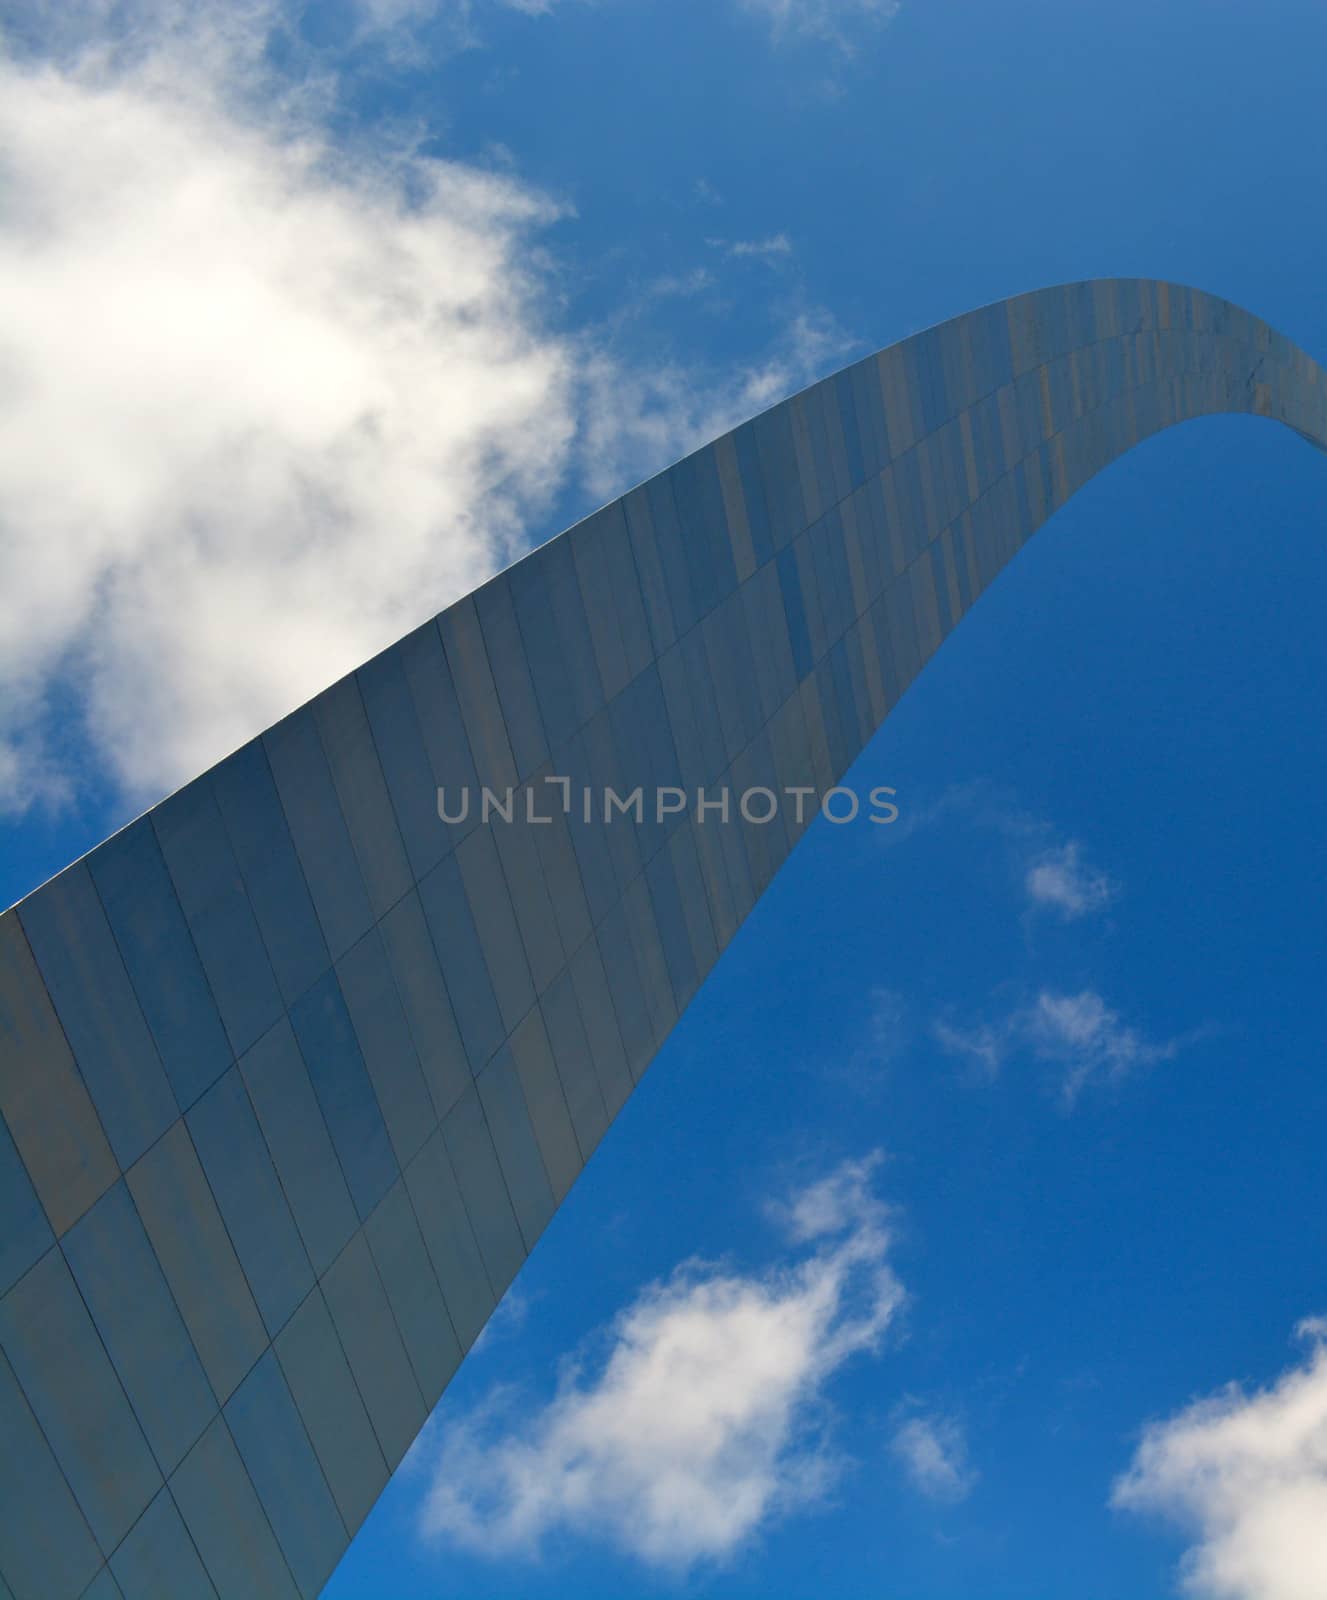 The Saint Louis Arch - A National Landmark in Missouri, USA